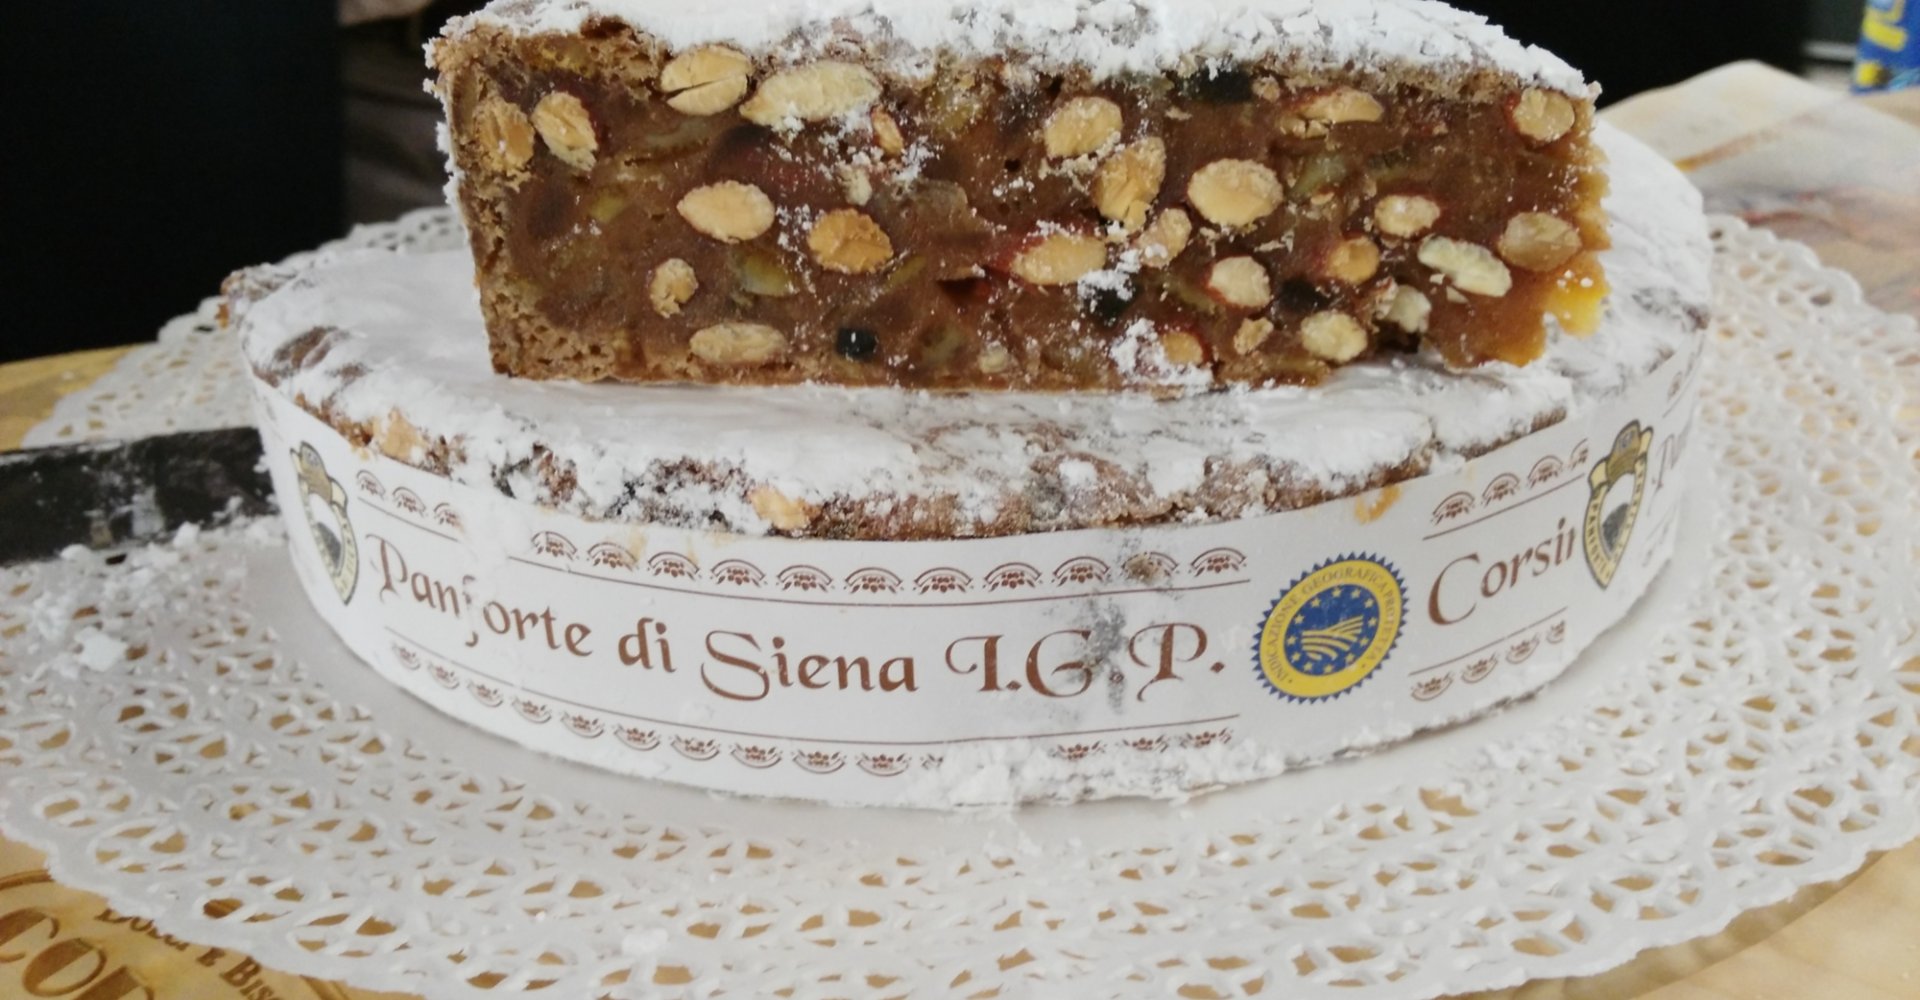 Panforte di Siena, un dessert traditionnel de Noël